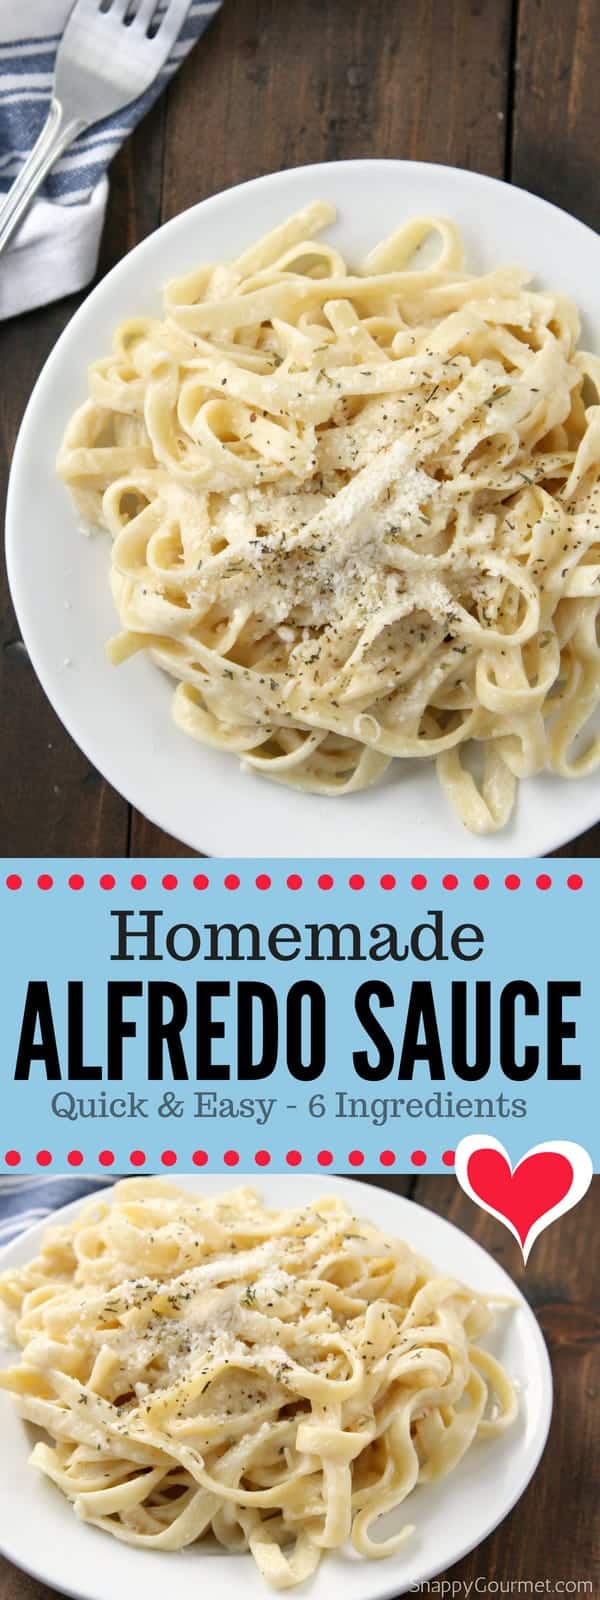 Homemade Alfredo Sauce Recipe - Snappy Gourmet